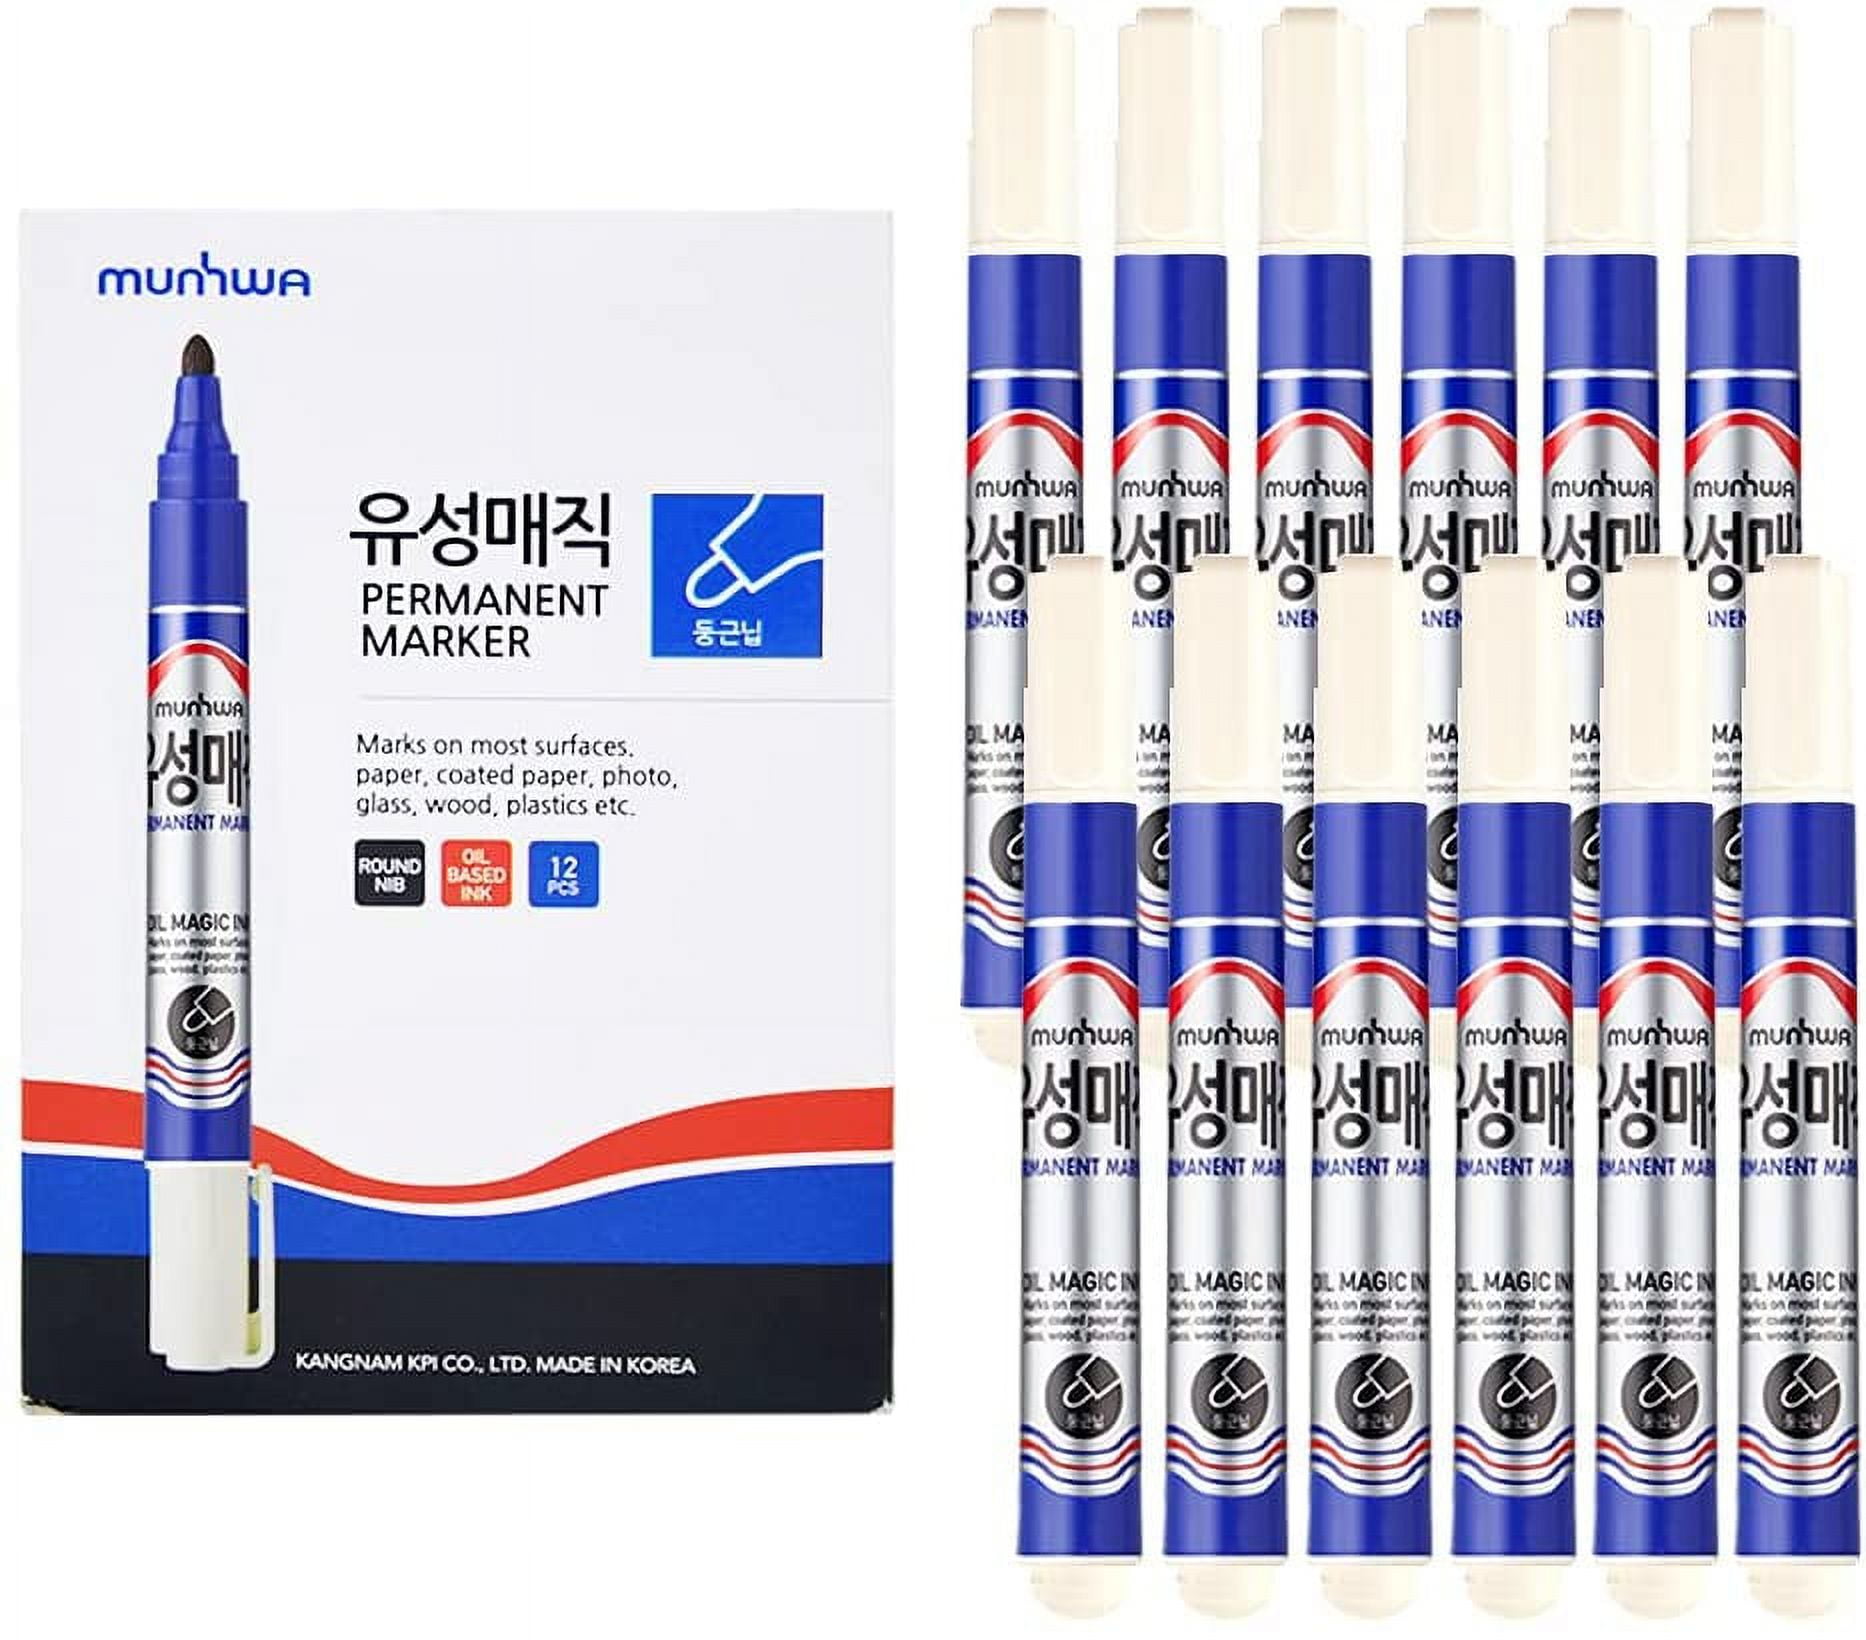 12 Colors Metallic Marker Pen Medium Point Metallic Markers for